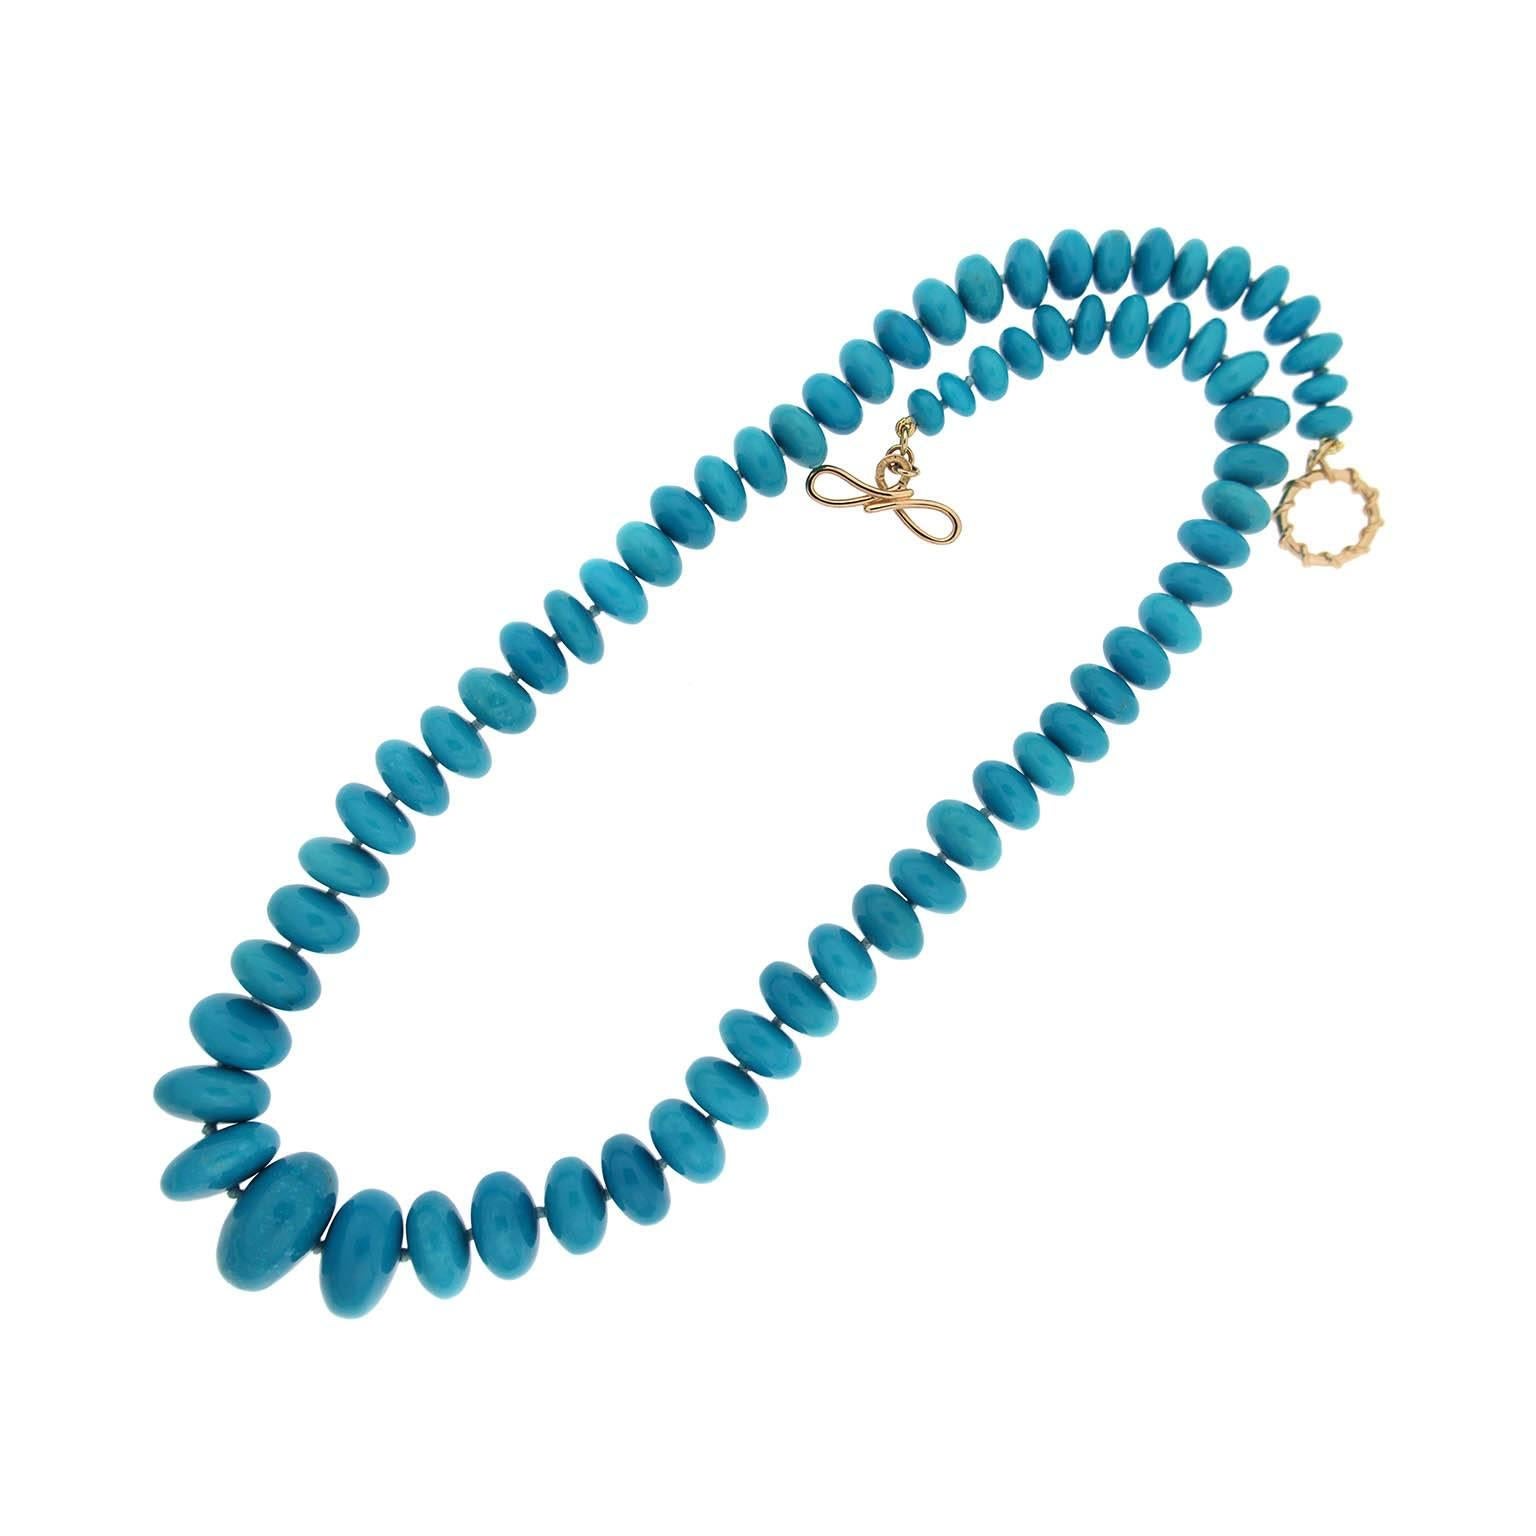 Sleeping beauty turquoise roundel necklace 